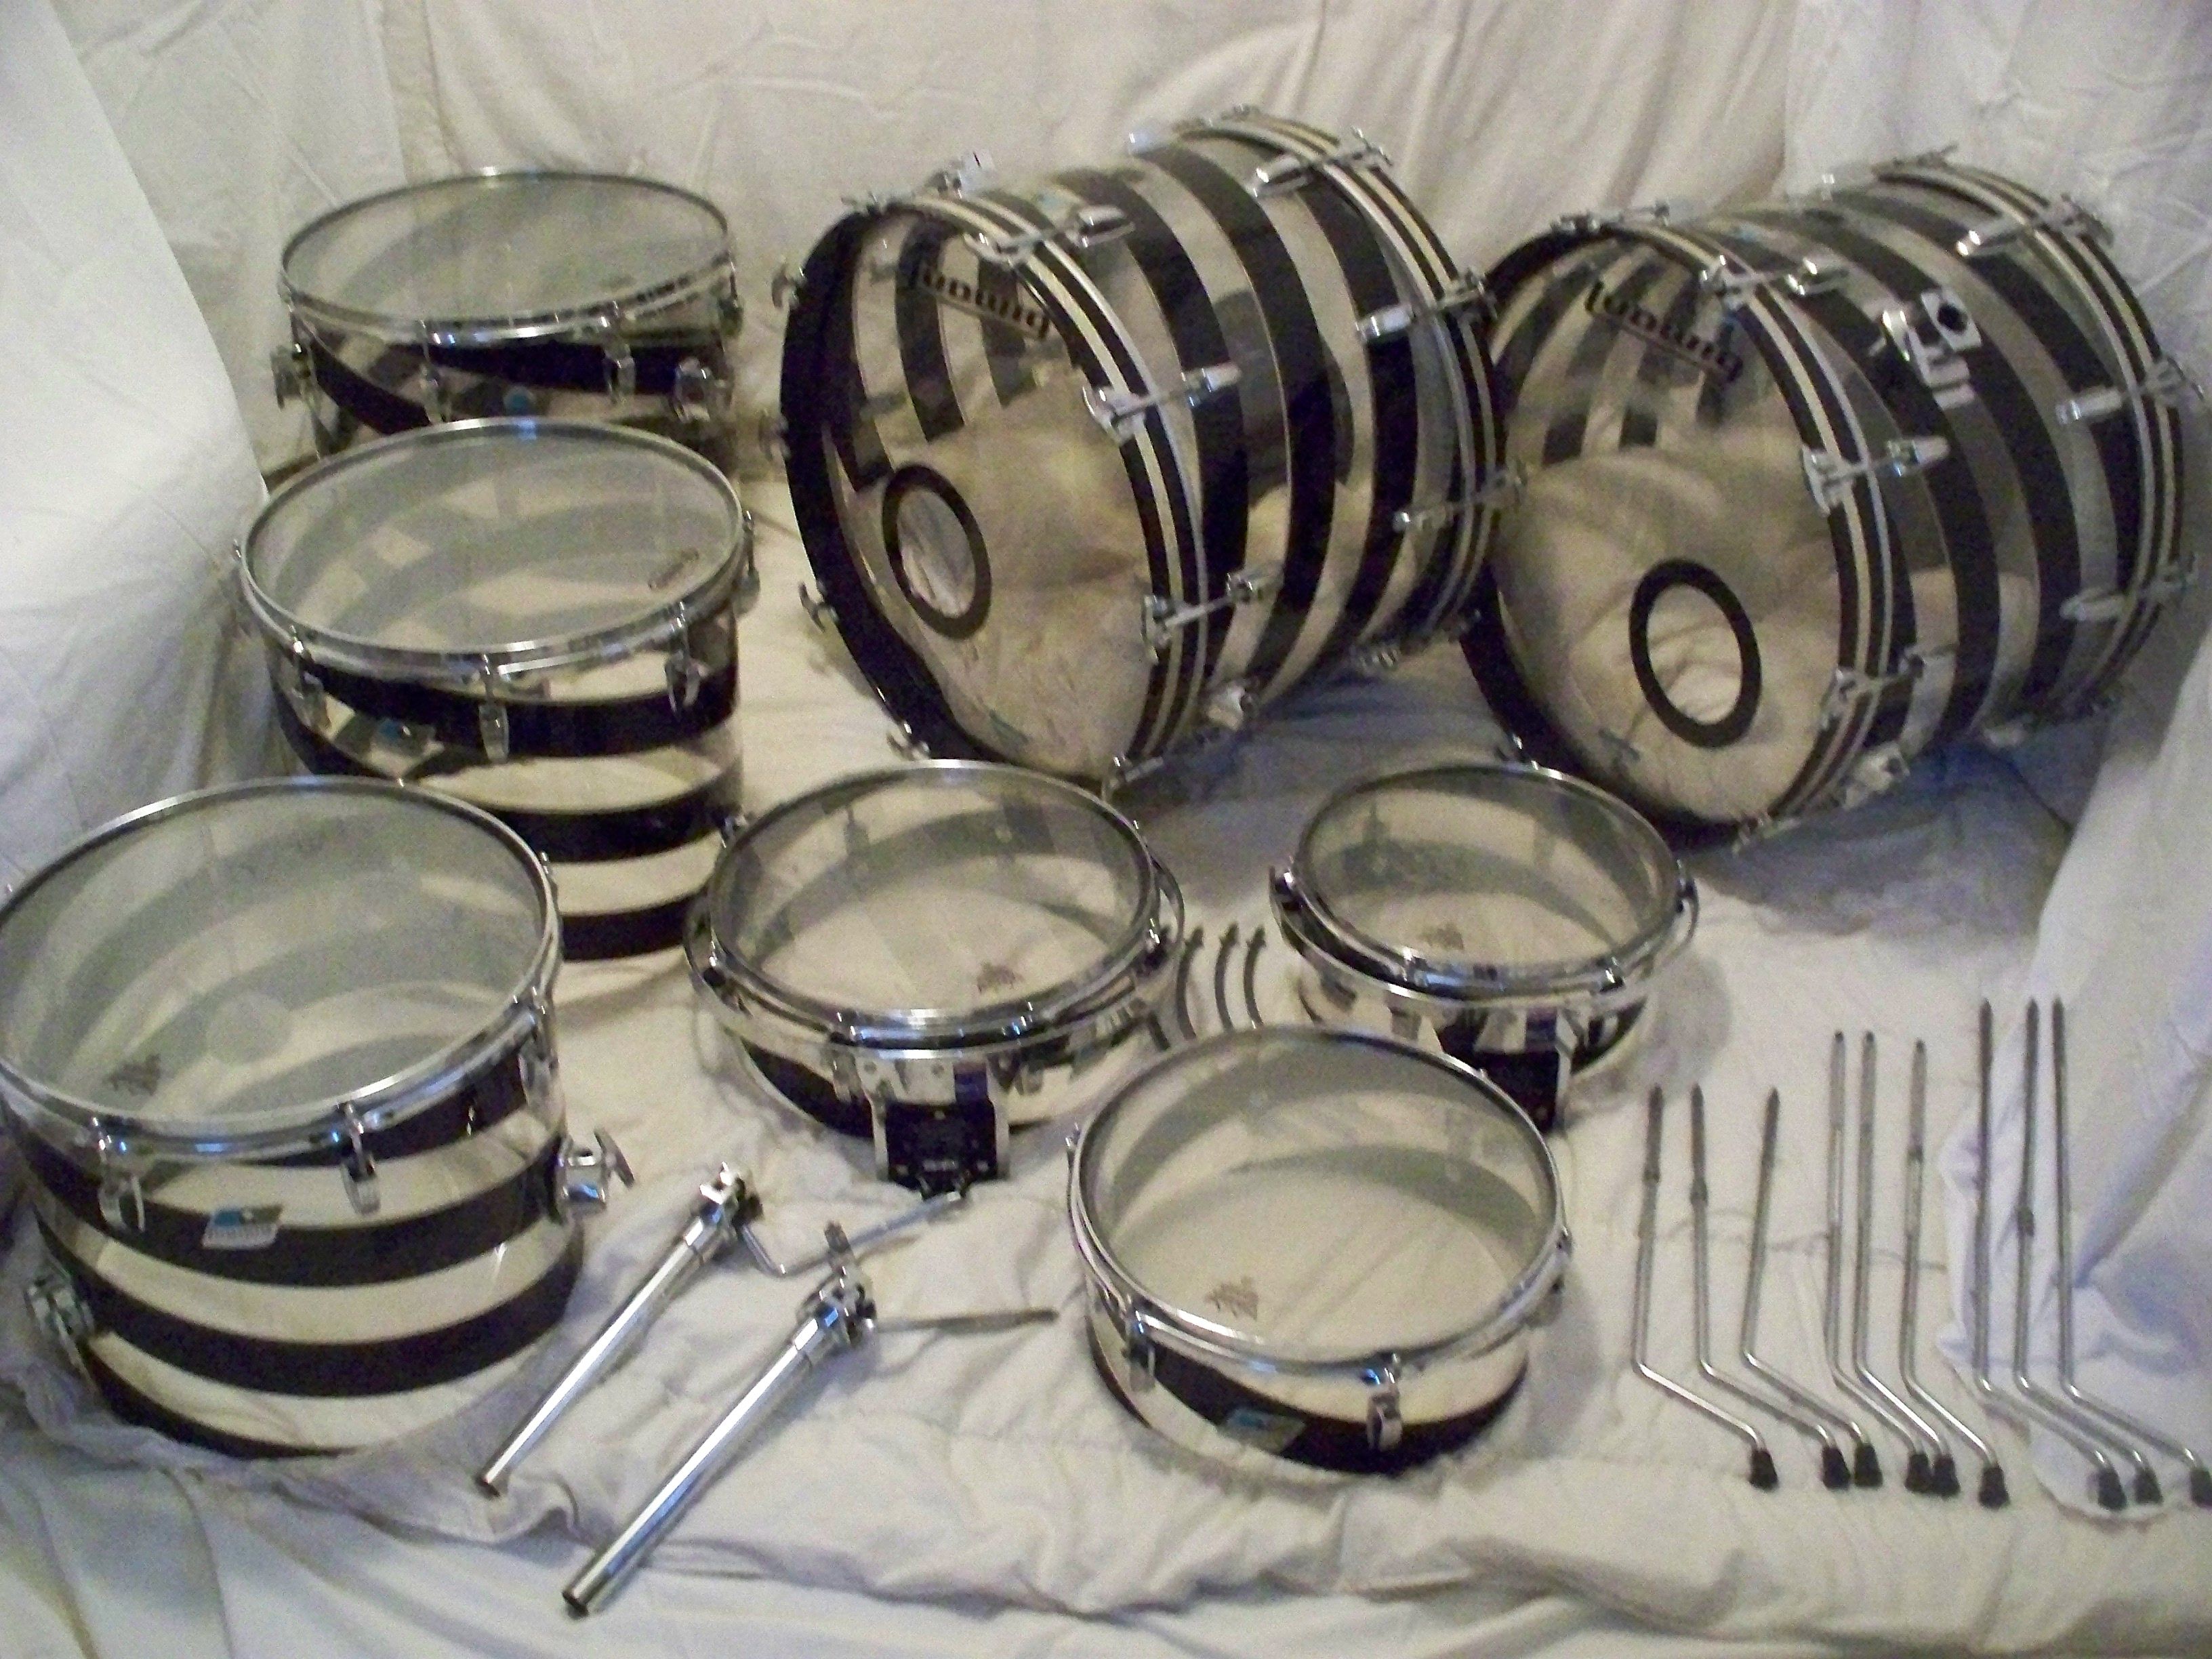 Ludwig Vistalite Mega Drum Kit, Timpanis, Gong, Stands, Cases